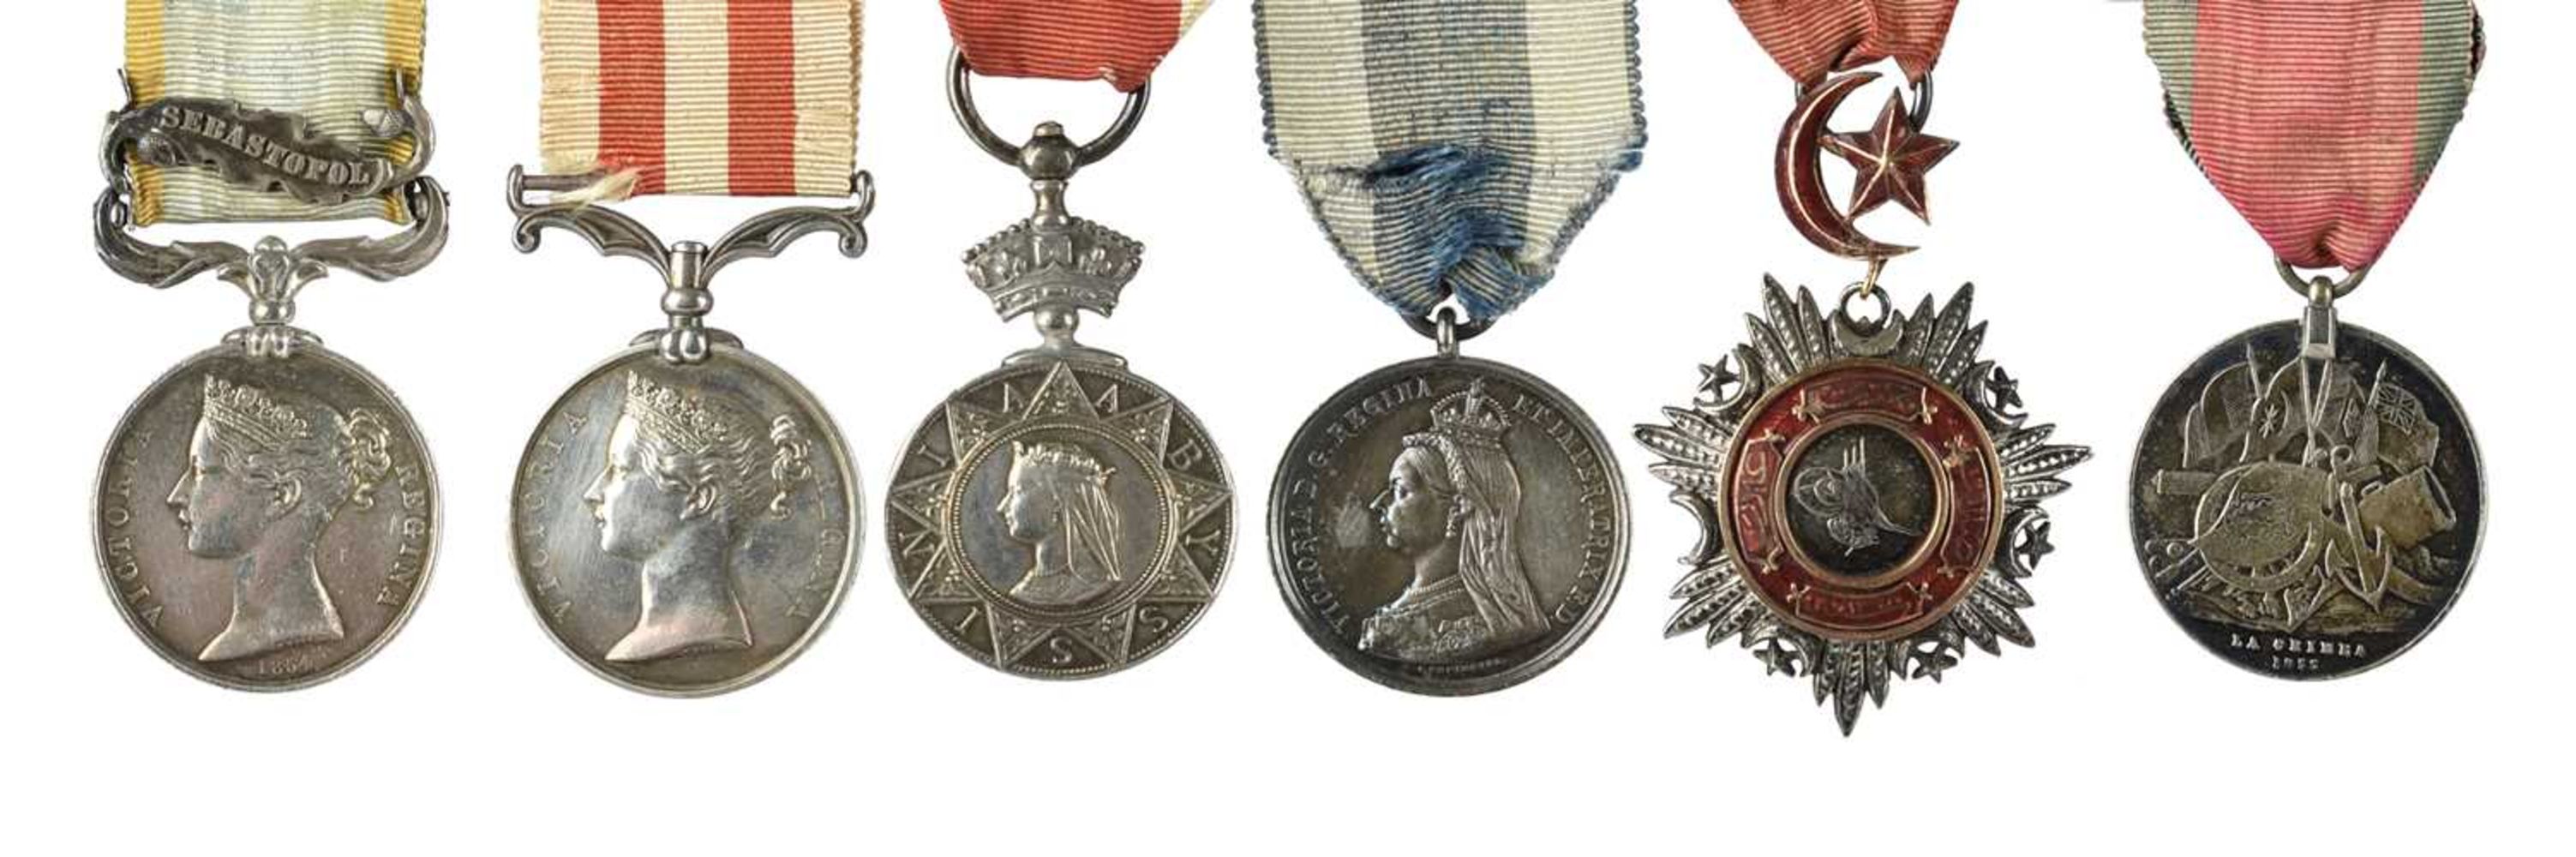 Medals & Coins, Arms & Armour | Militaria